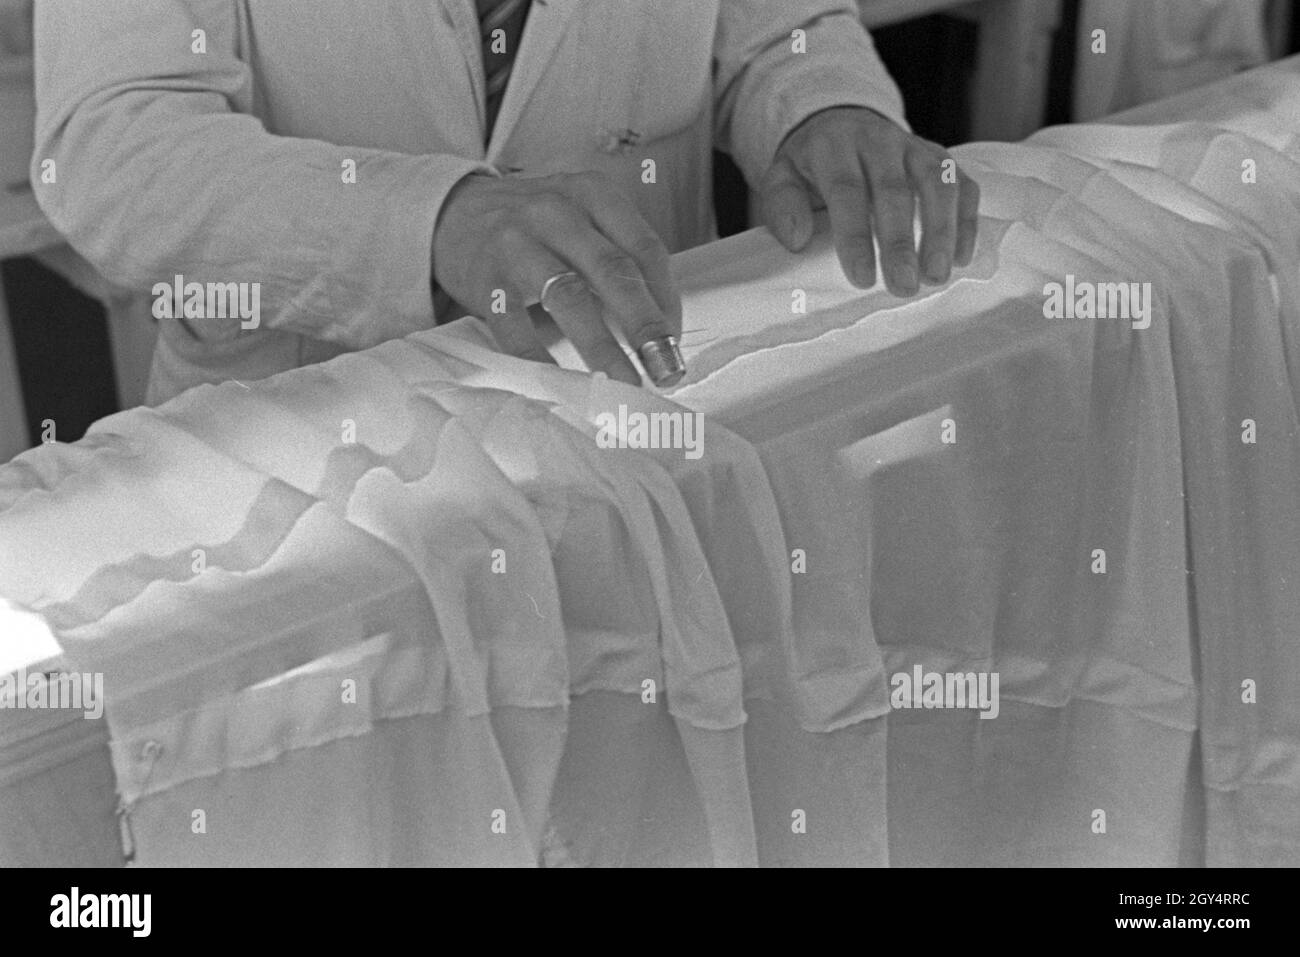 Hände des Vorarbeiters in einer Fallschirm Näherei, Deutschland 1940er Jahre. Le mani di un headman ad un paracadute di fabbrica di cucitura, Germania 1940s. Foto Stock